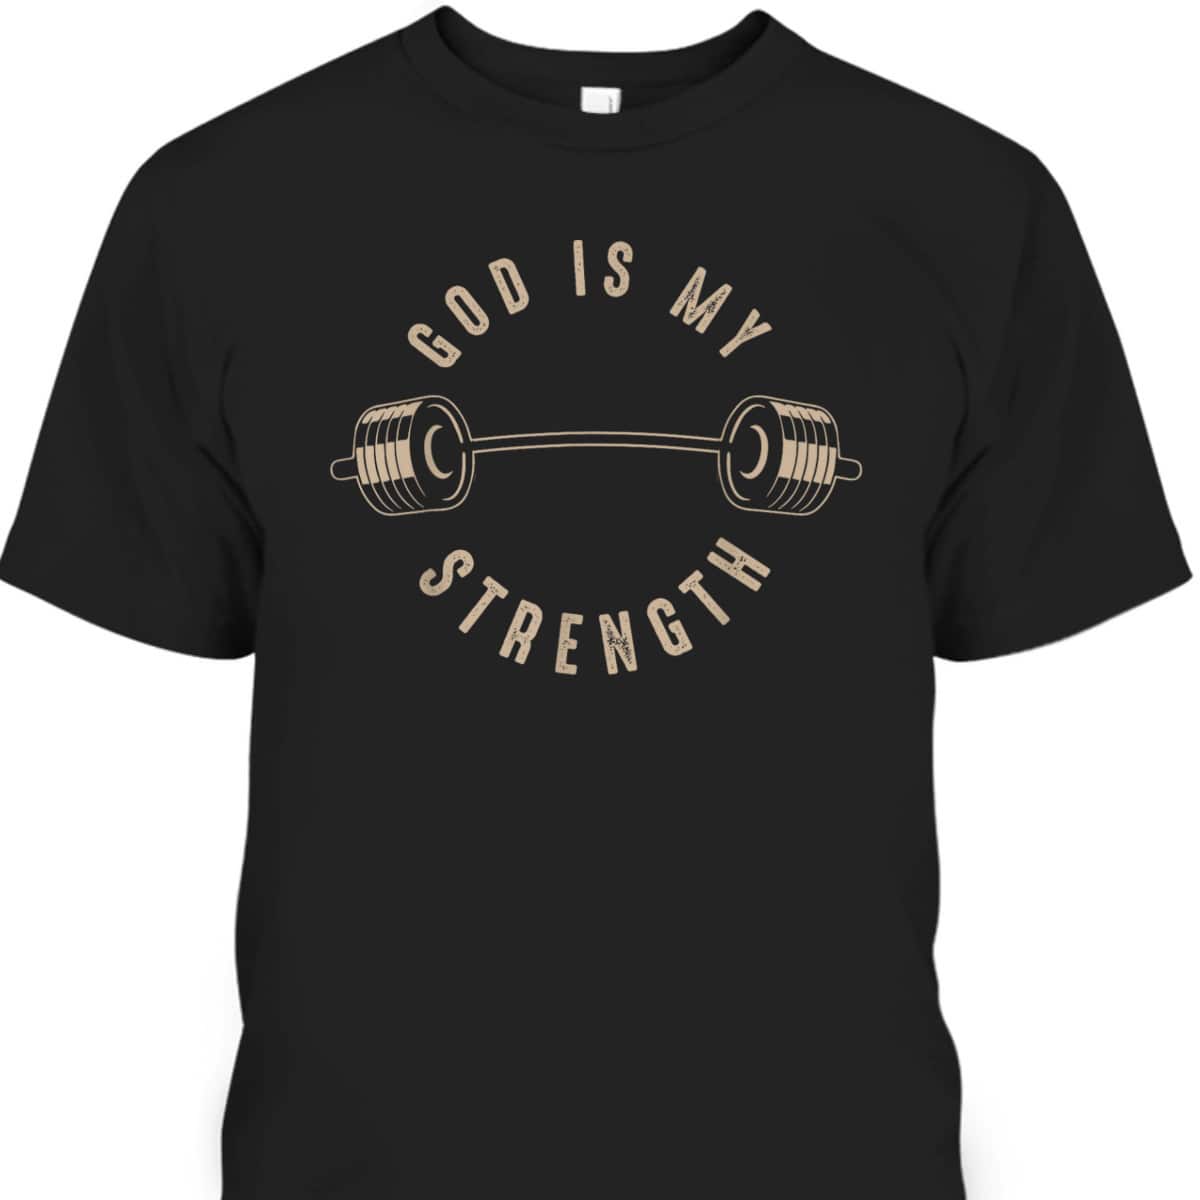 God Is My Strength Christian God Is Rock Gym T-Shirt